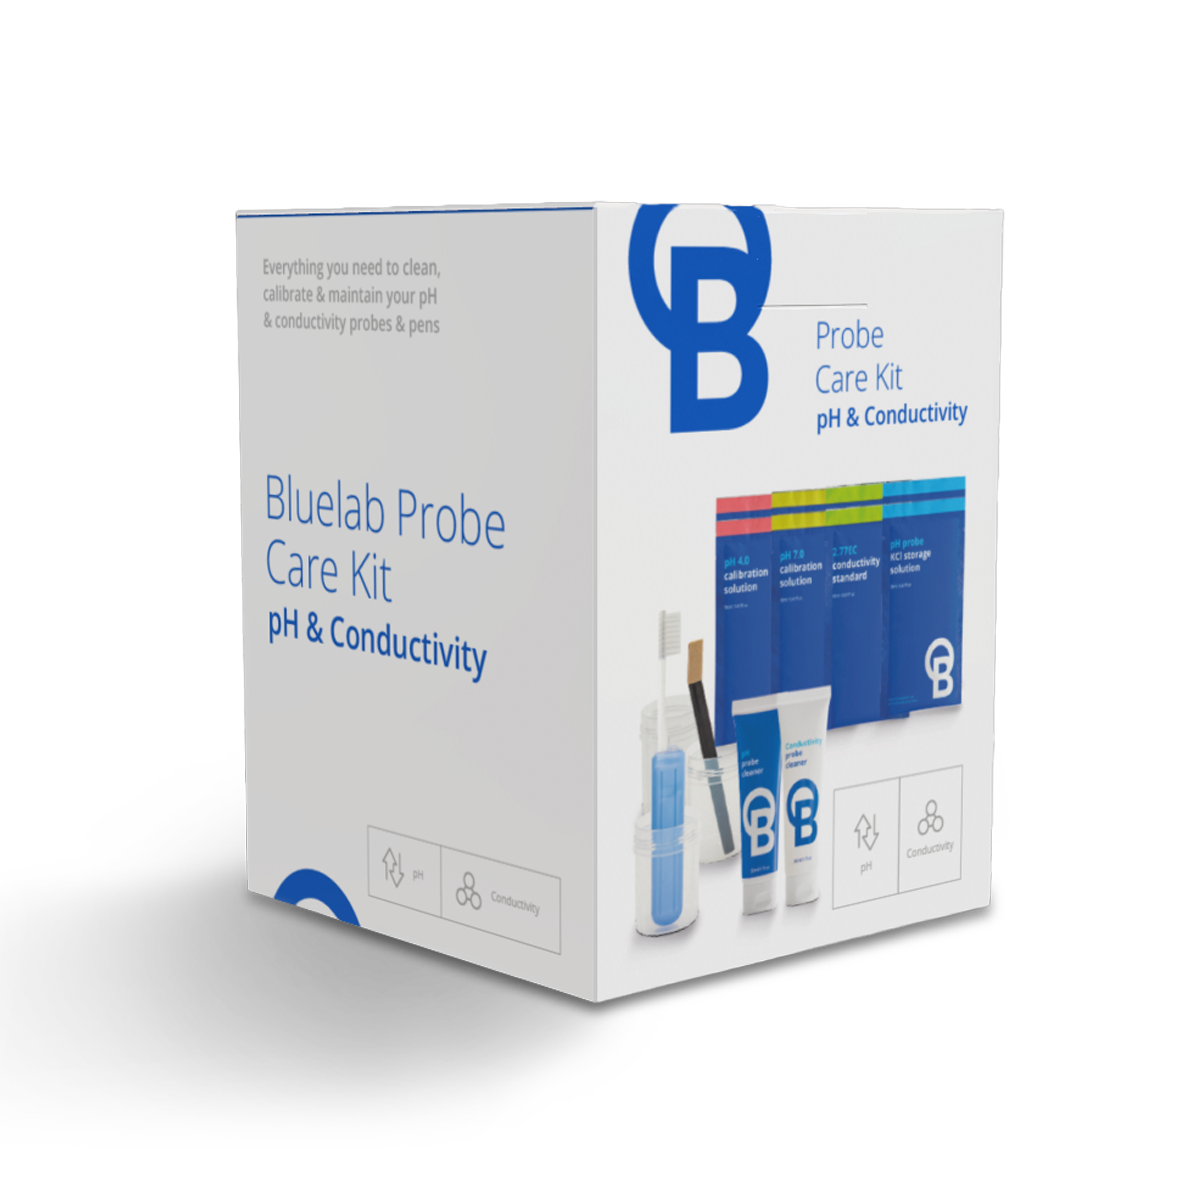 Bluelab Probe Care Kit – pH & Conductivity